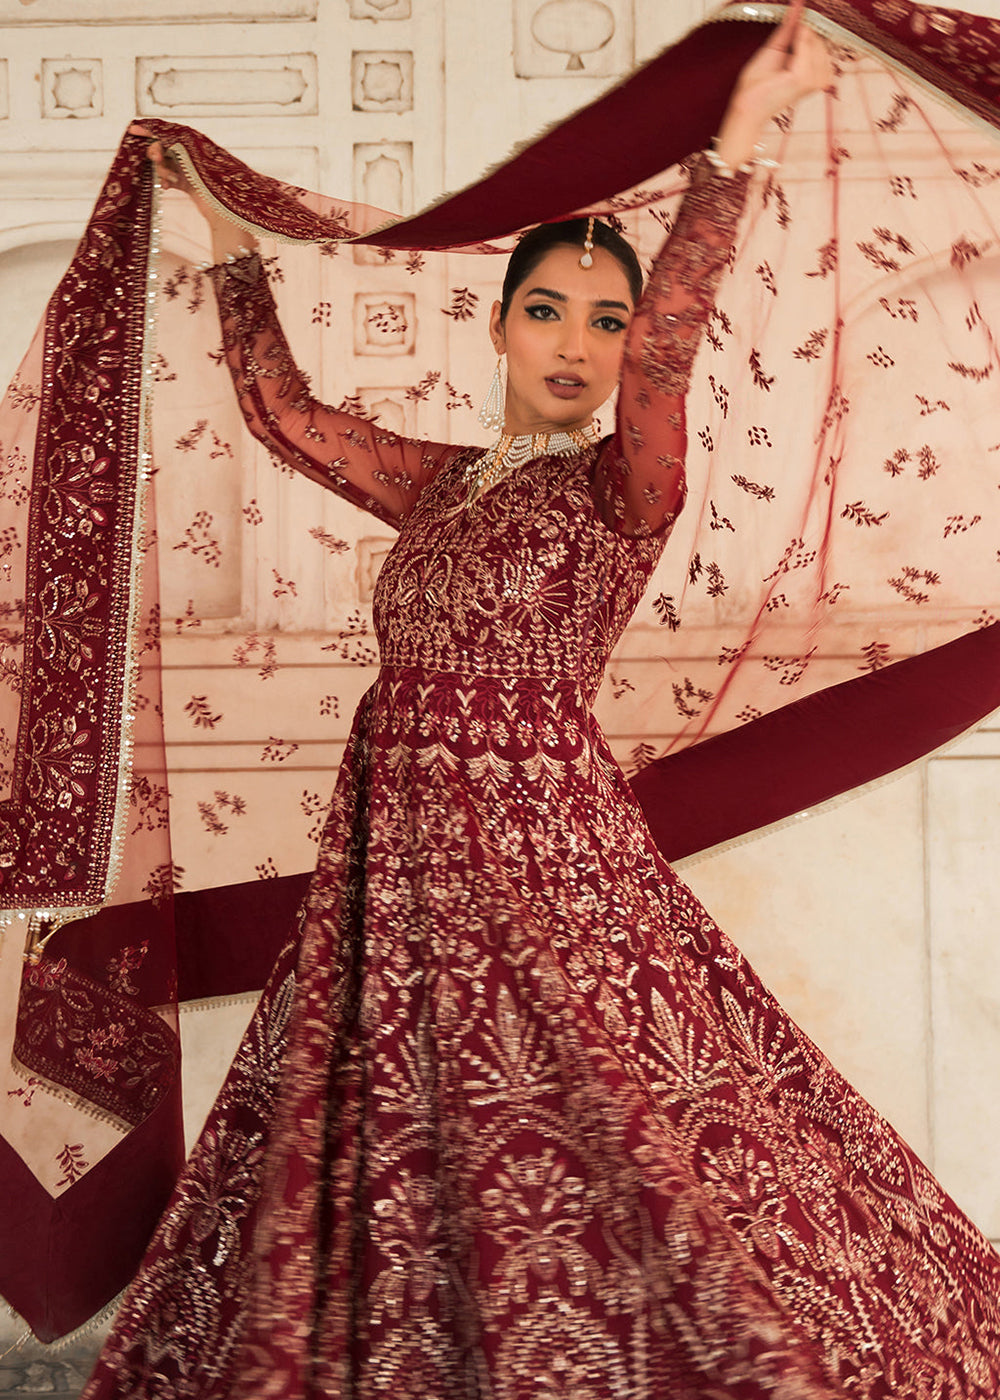 Buy Now Pehli Nazar Wedding Formals '24 by Ayzel | ZULEKHA Online at Empress in USA, UK, Canada, Germany, Italy, Dubai & Worldwide at Empress Clothing.